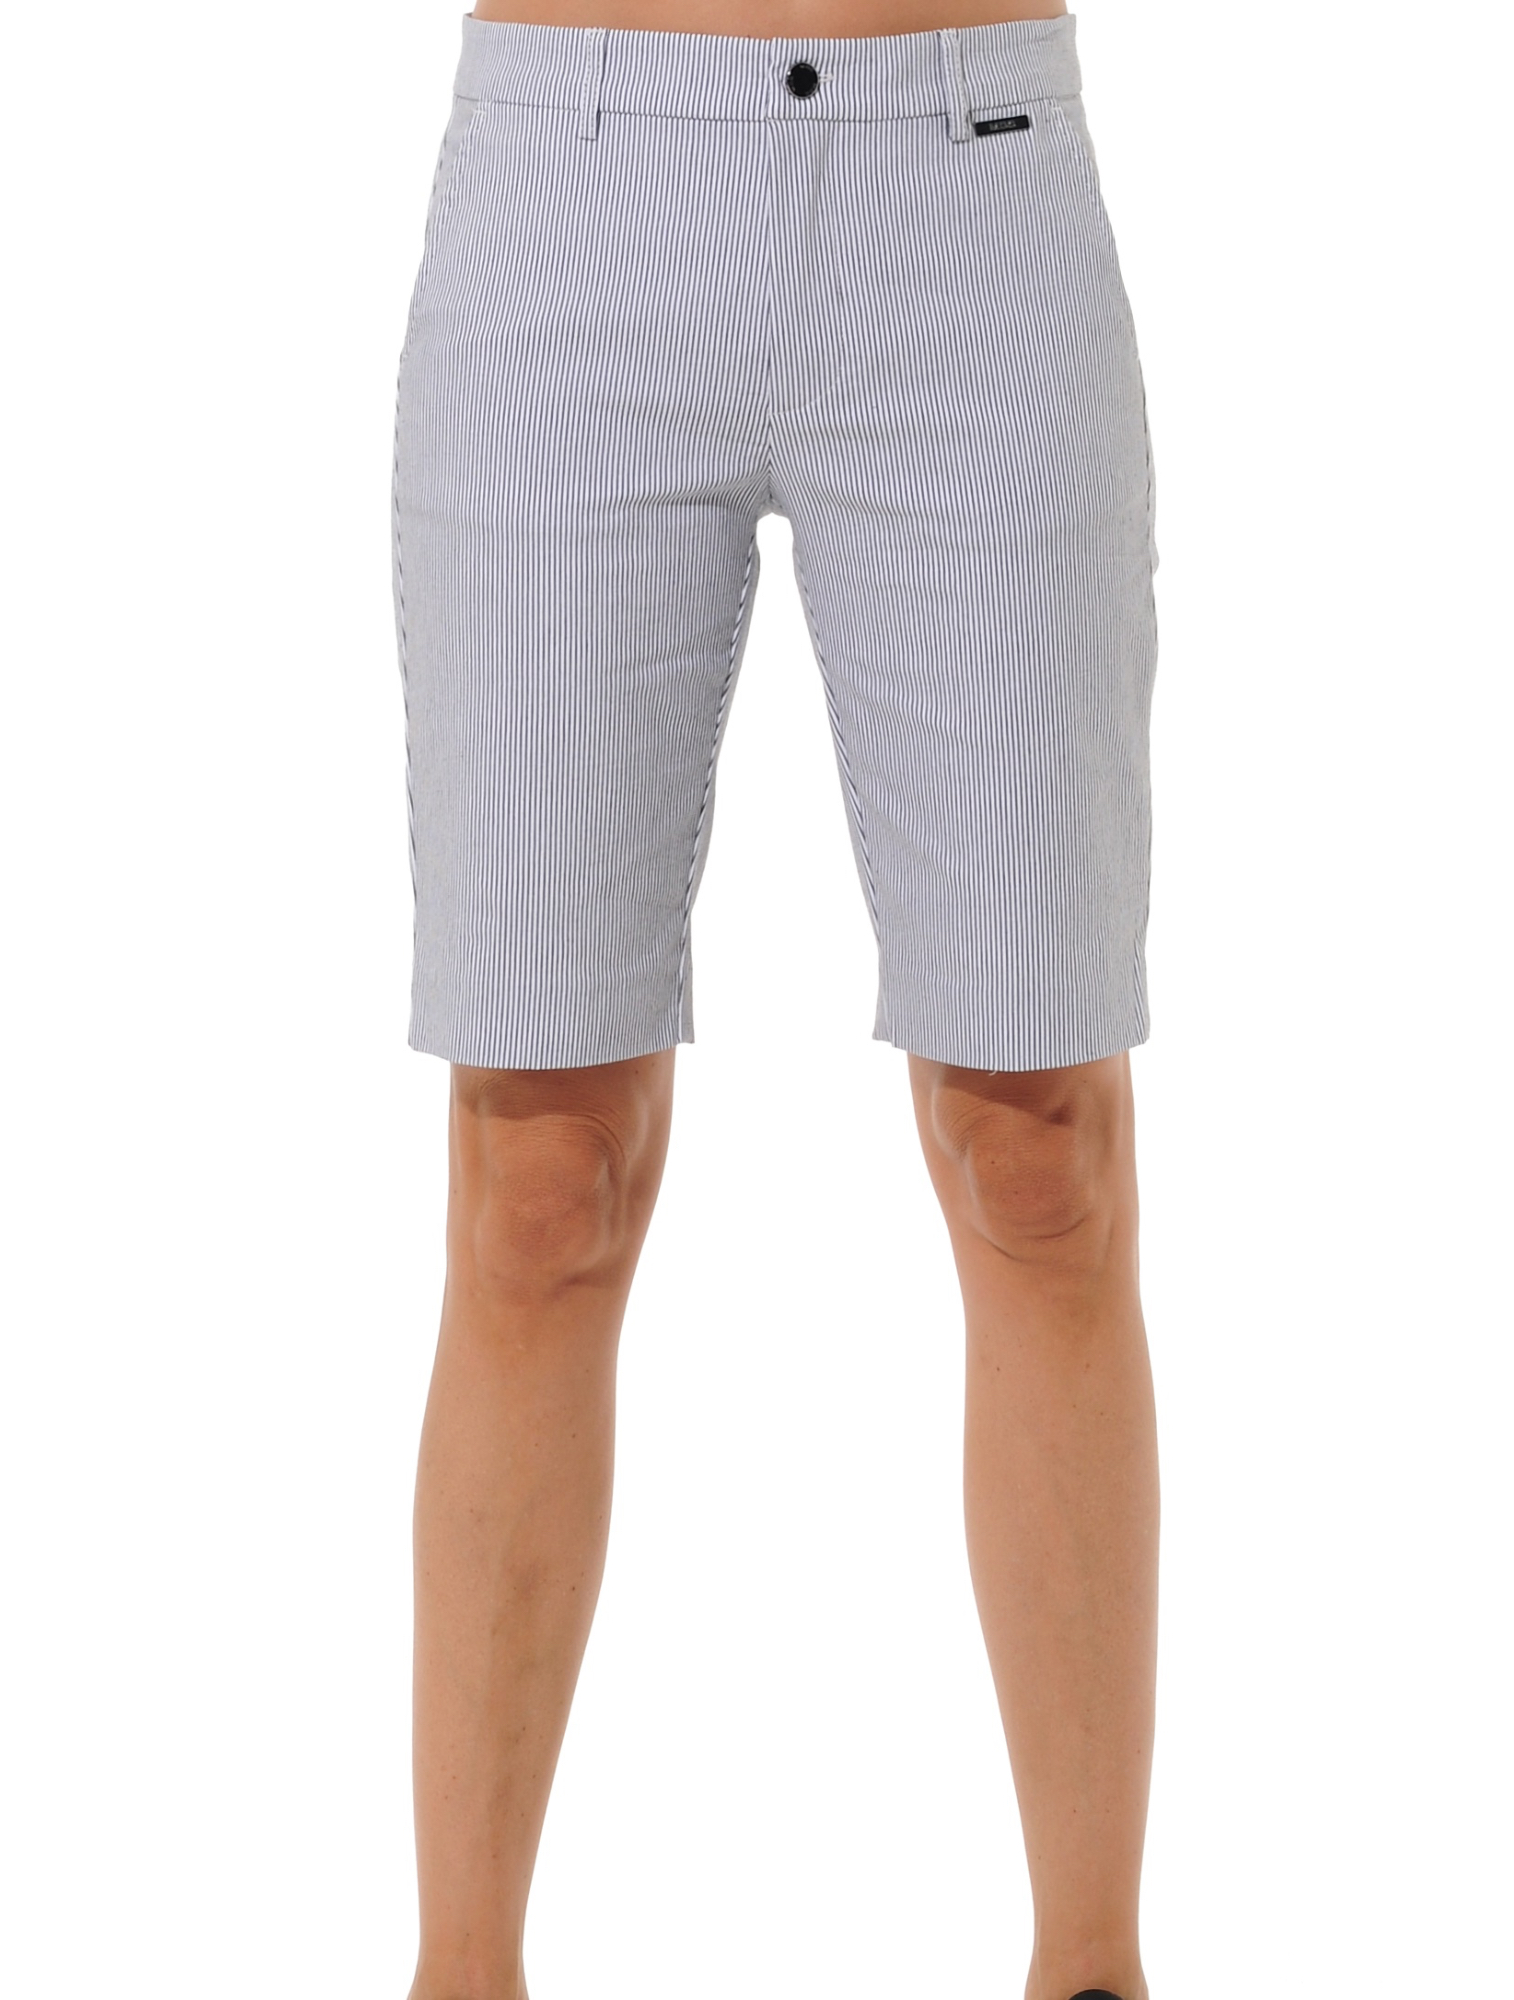 Cotton stretch golf shorts black/white